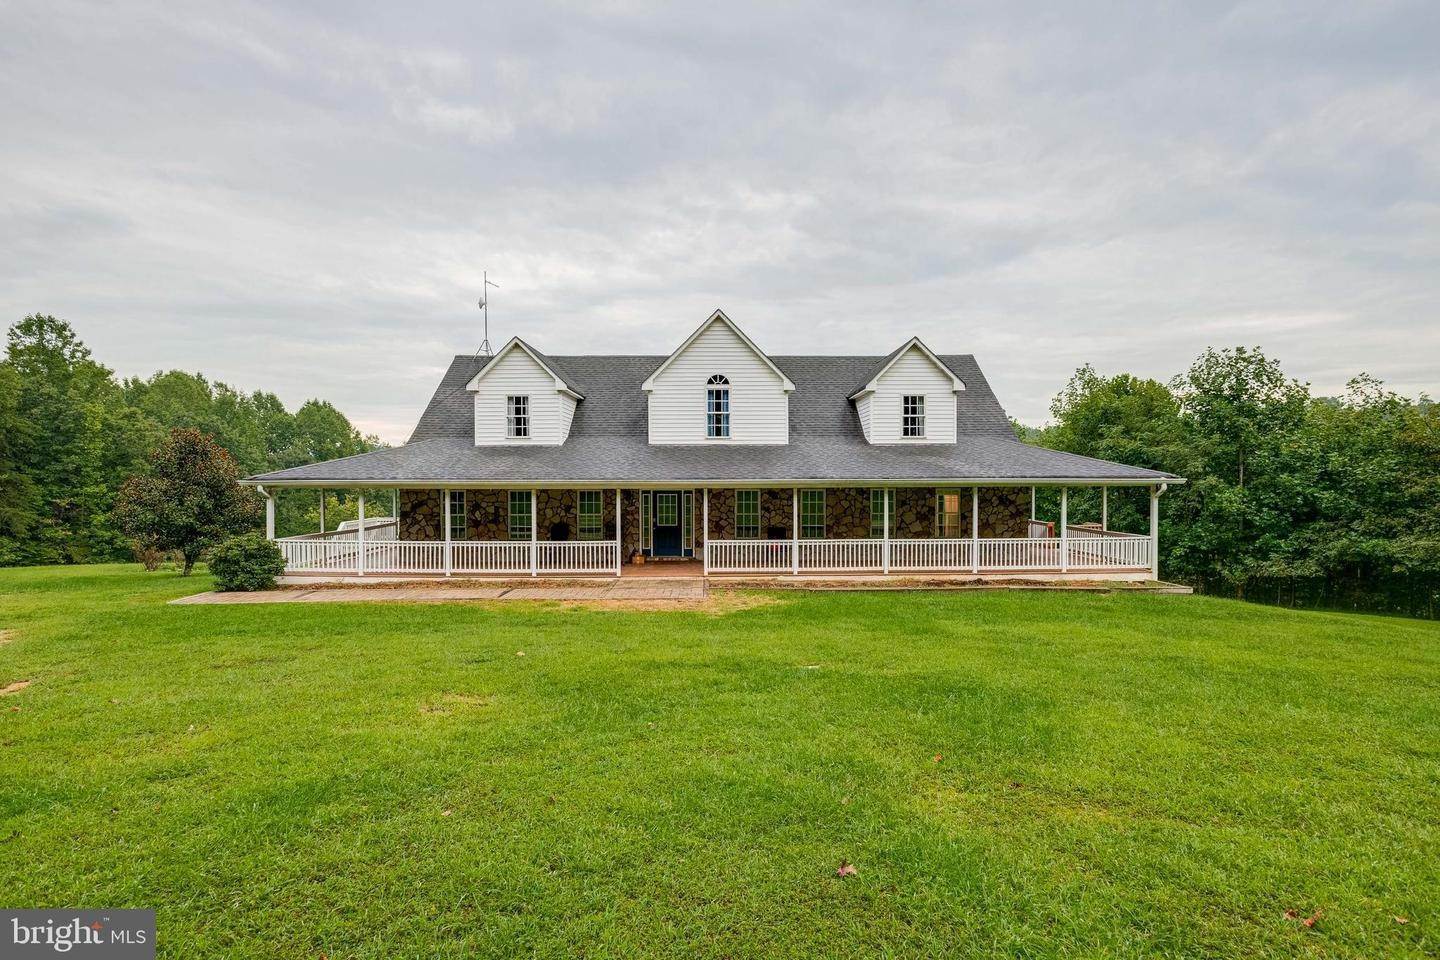 Single Family Homes για την Πώληση στο Castleton, Βιρτζινια 22716 Ηνωμένες Πολιτείες